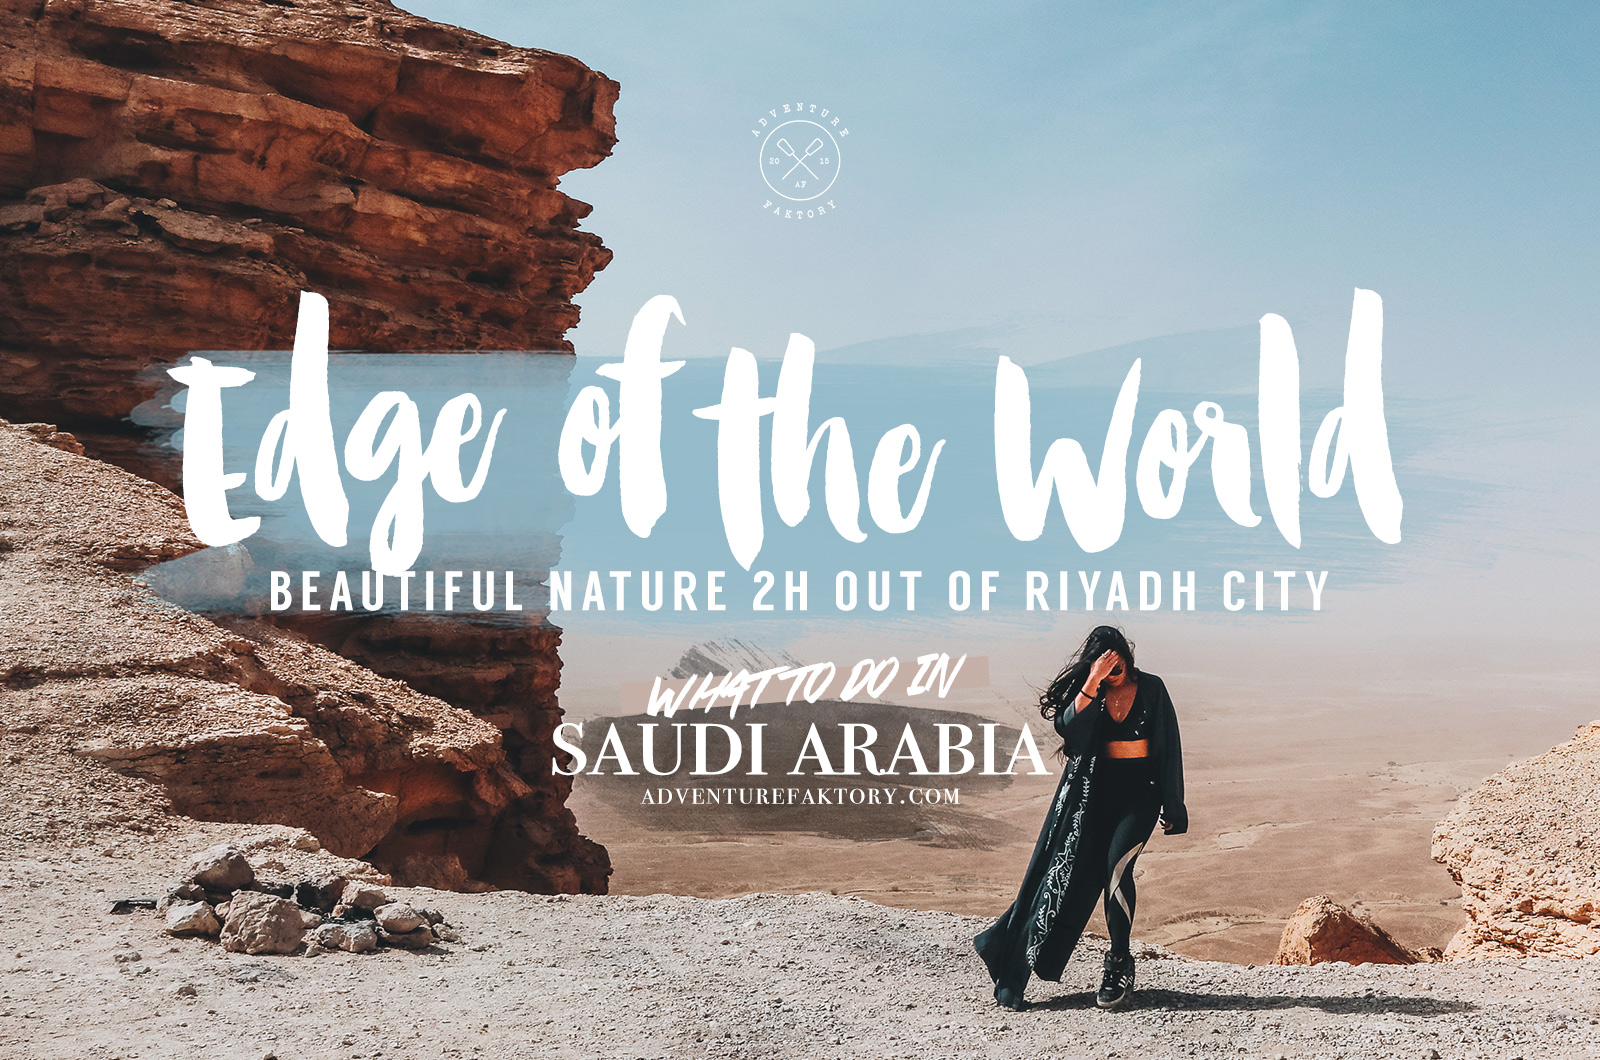 Edge of the world riyadh